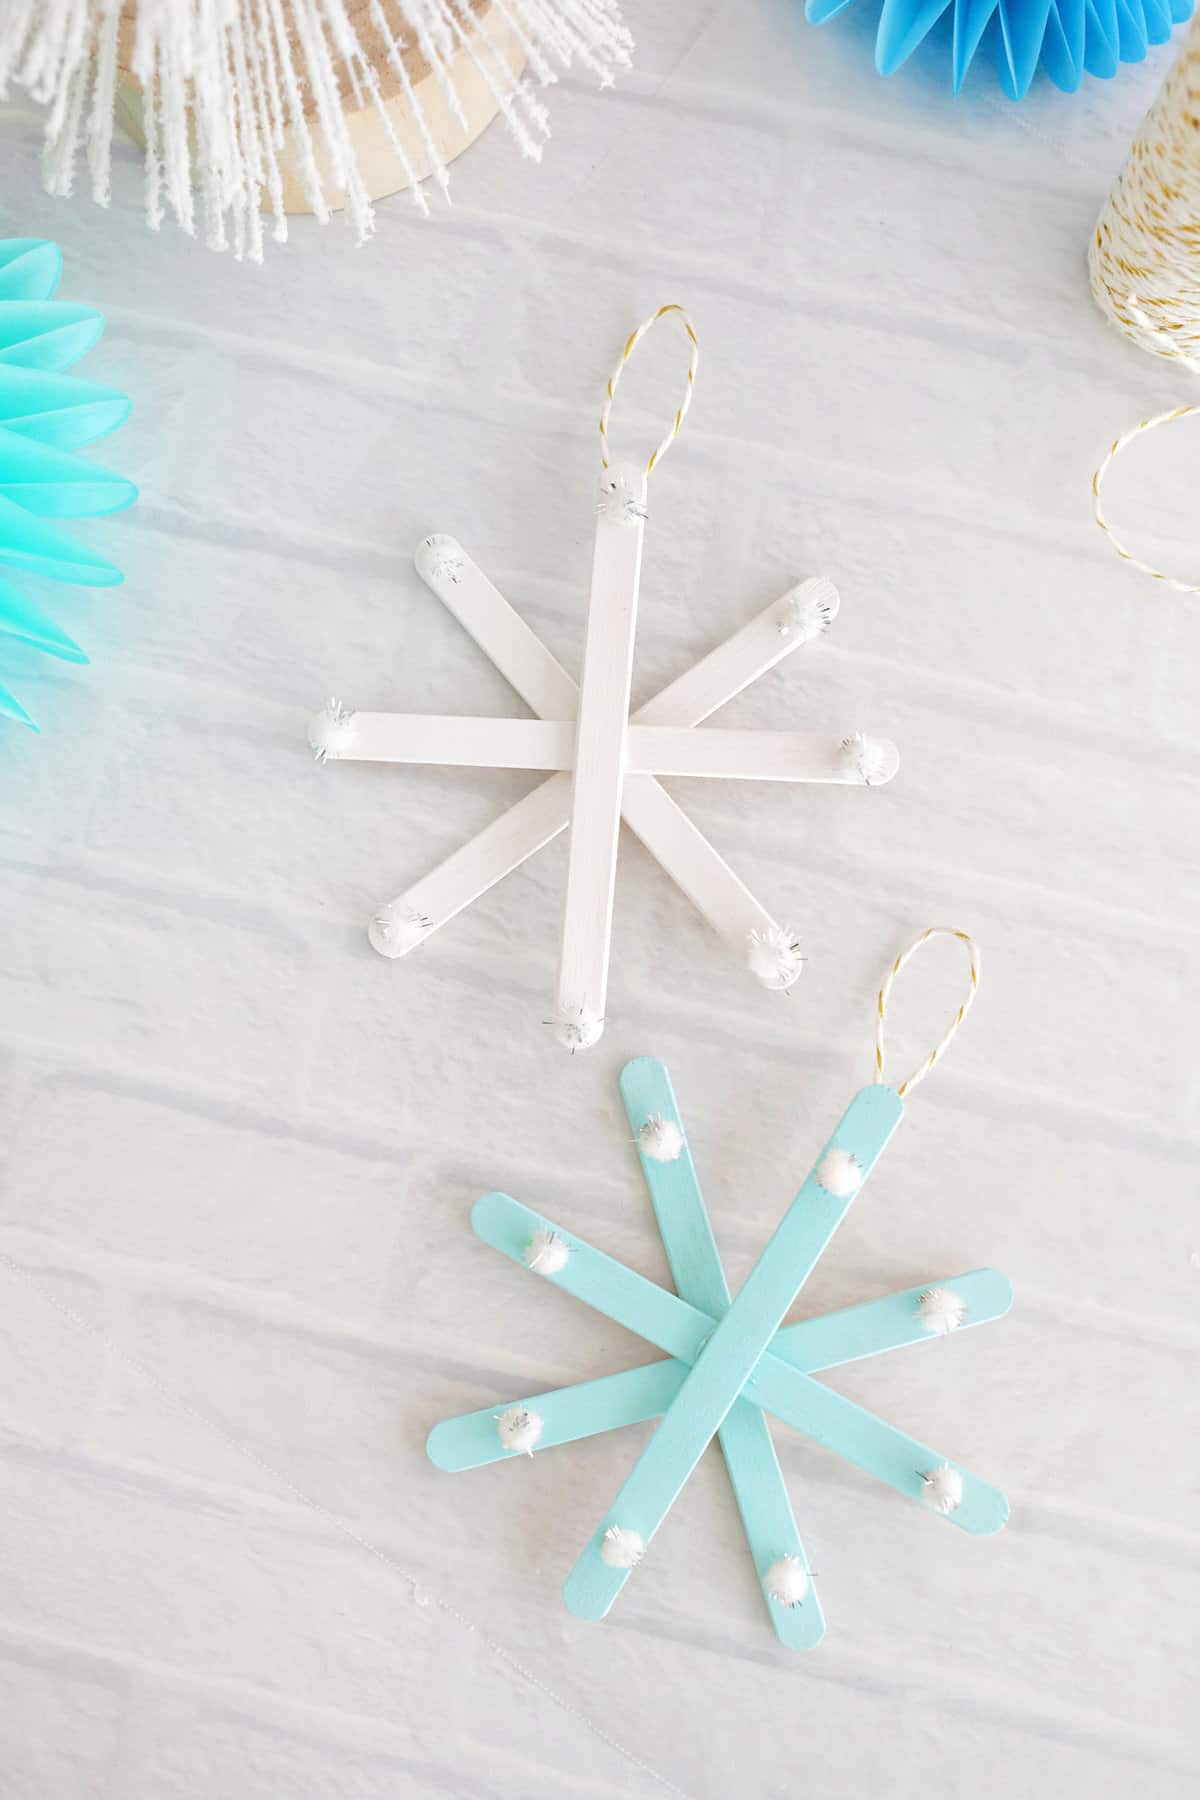 popsicle stick snowflake craft